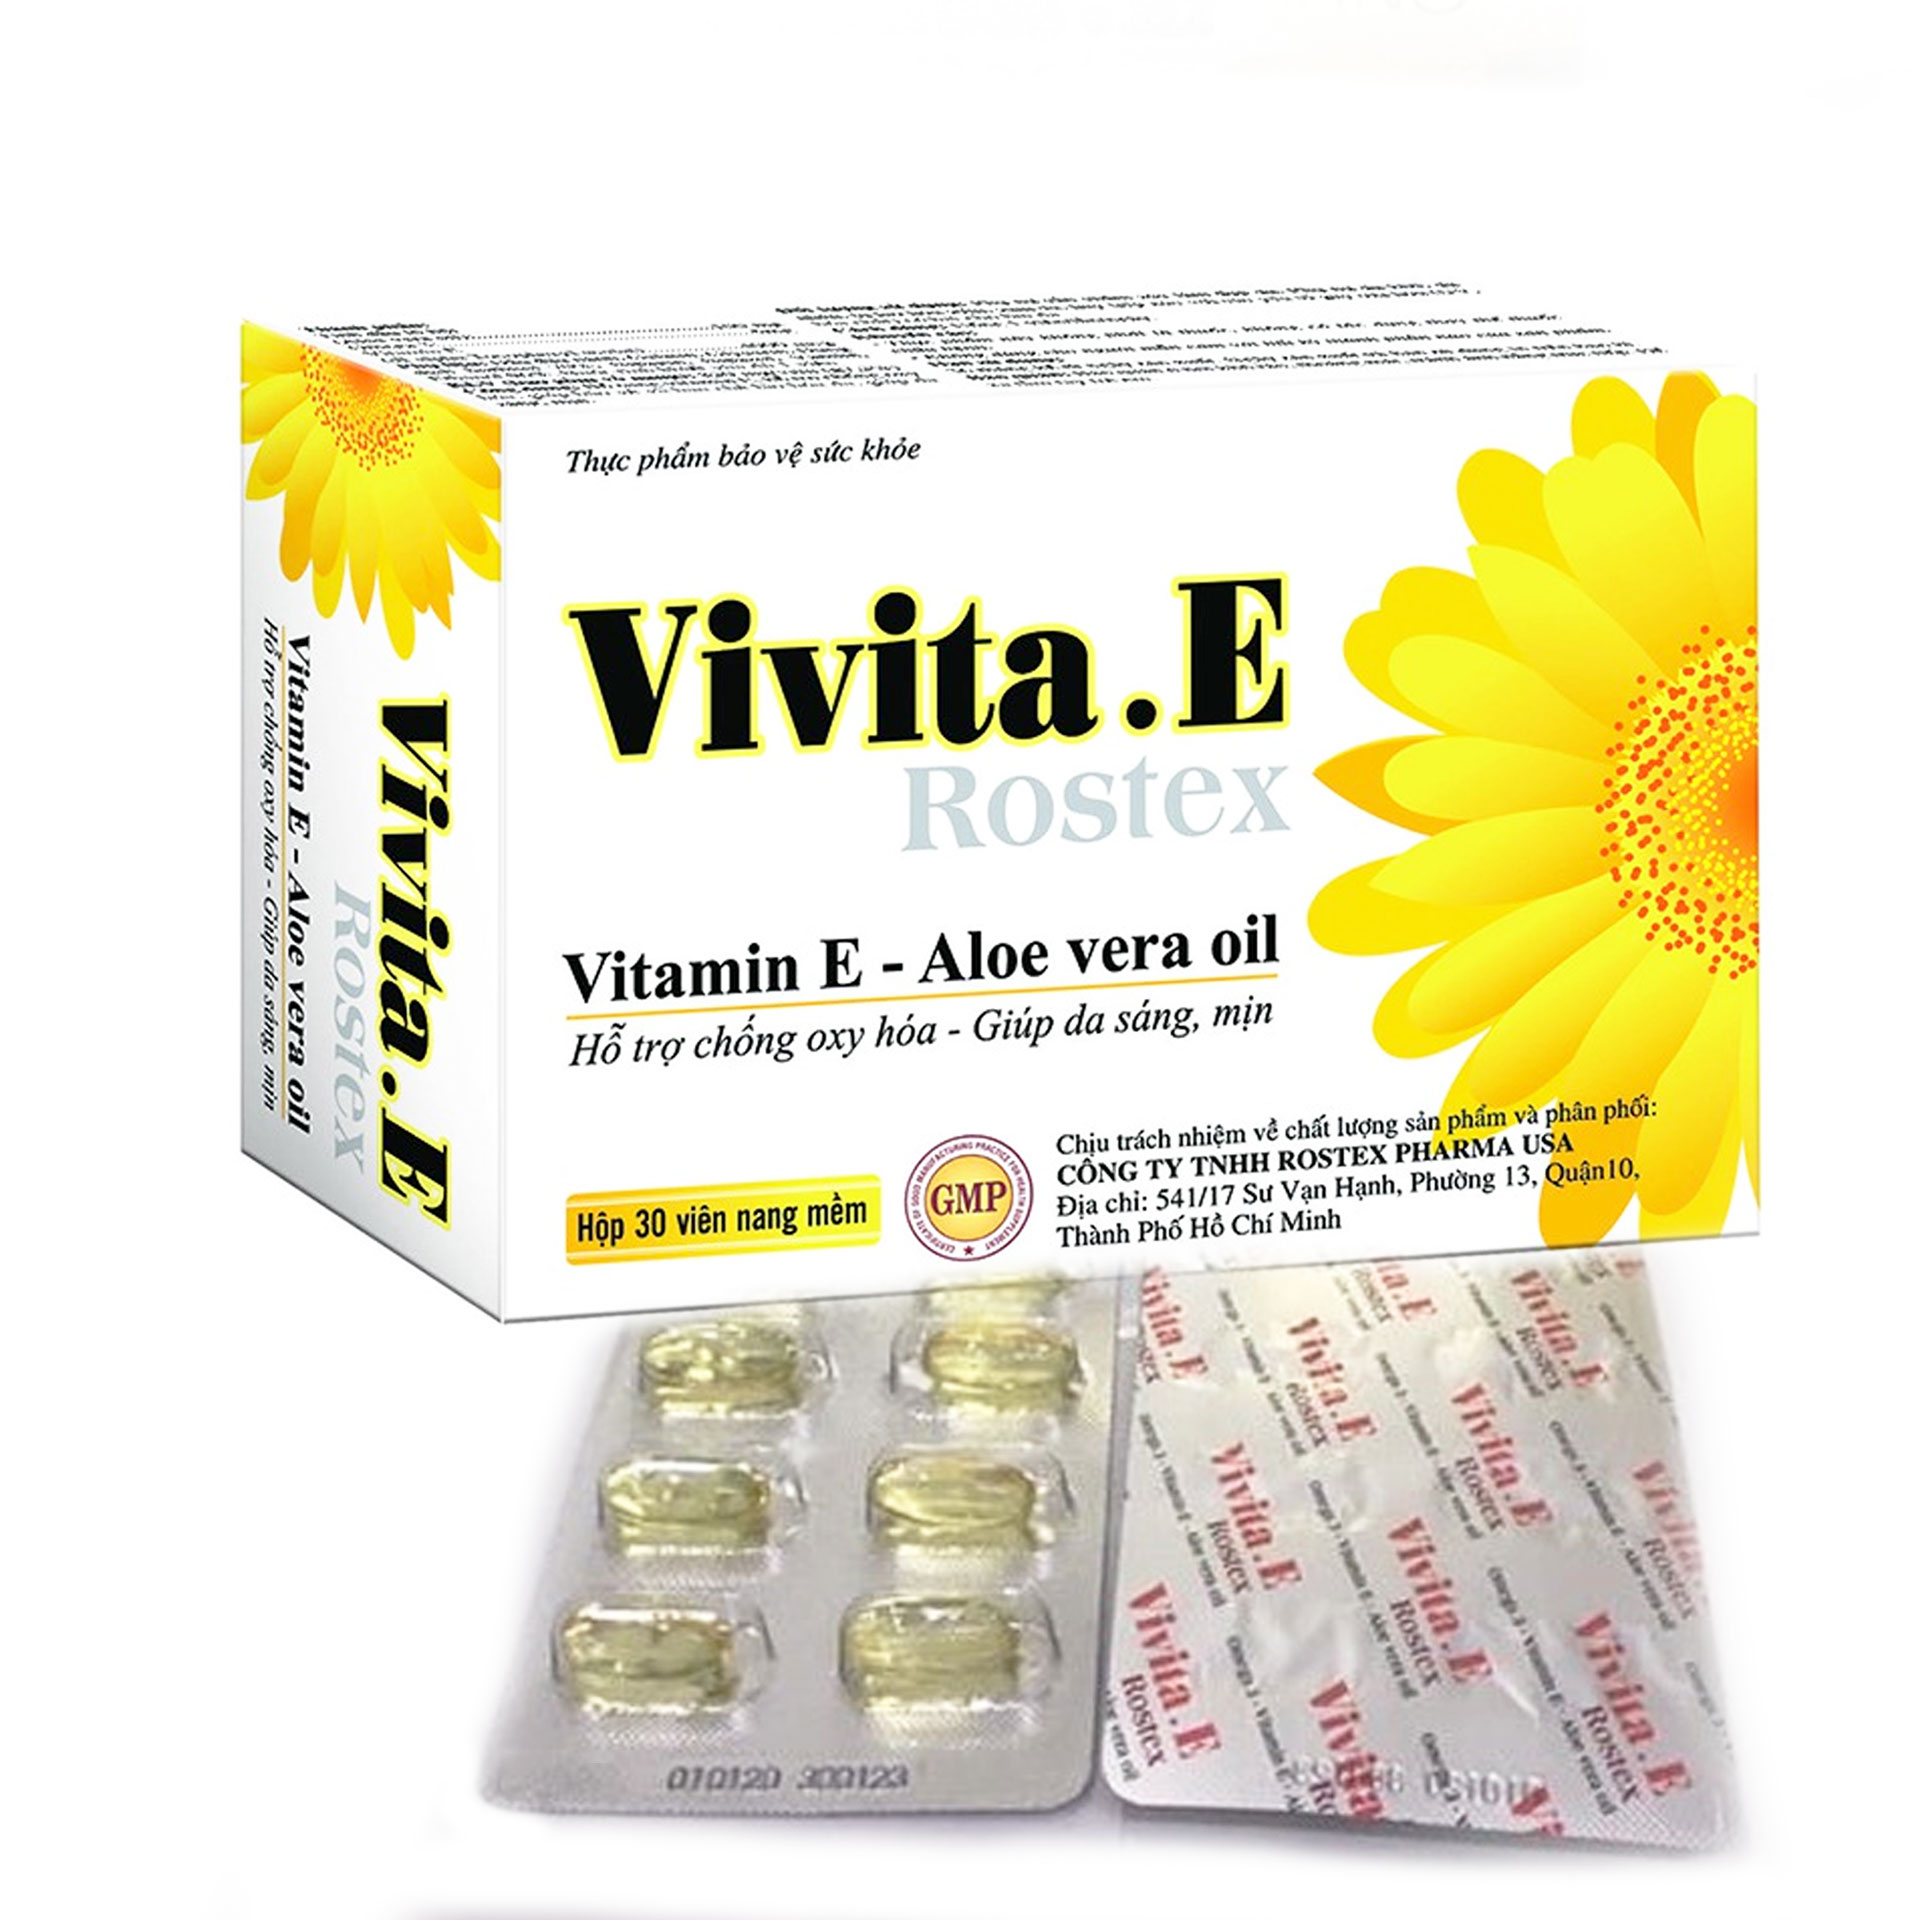 Viên uống đẹp da làm chậm lão hóa Vitamin E Vivita.E Rostex